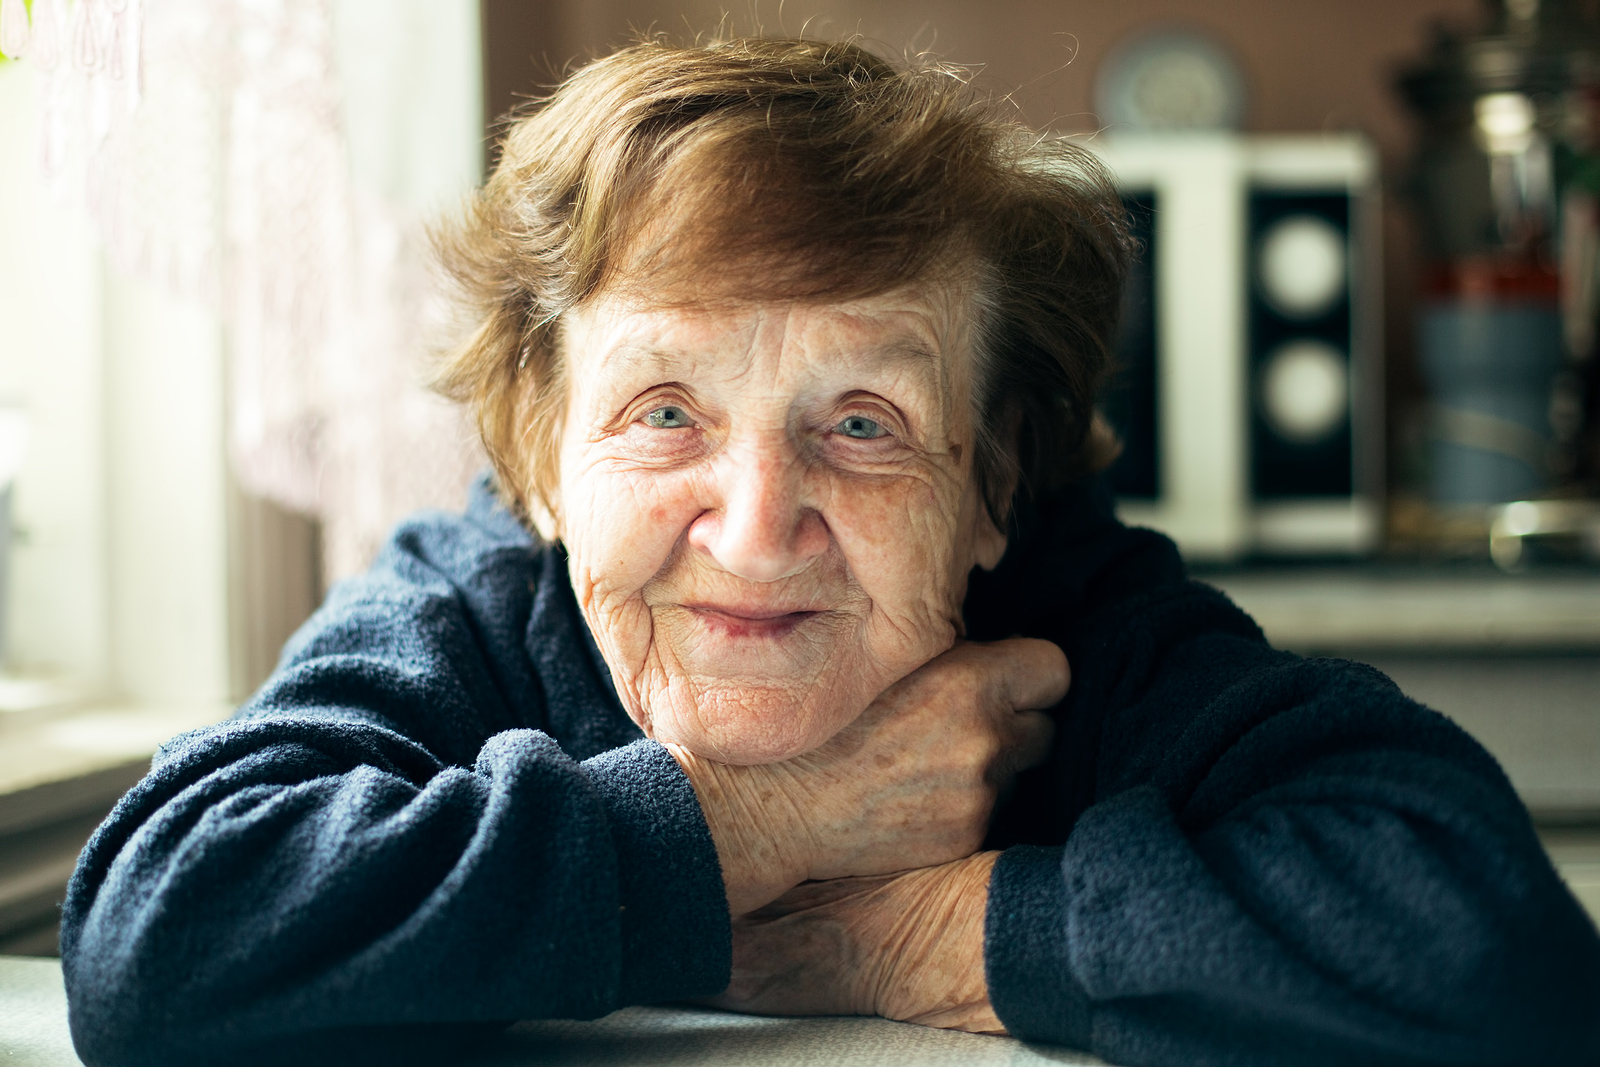  Elder Care in Studio City CA: Frontotemporal Dementia